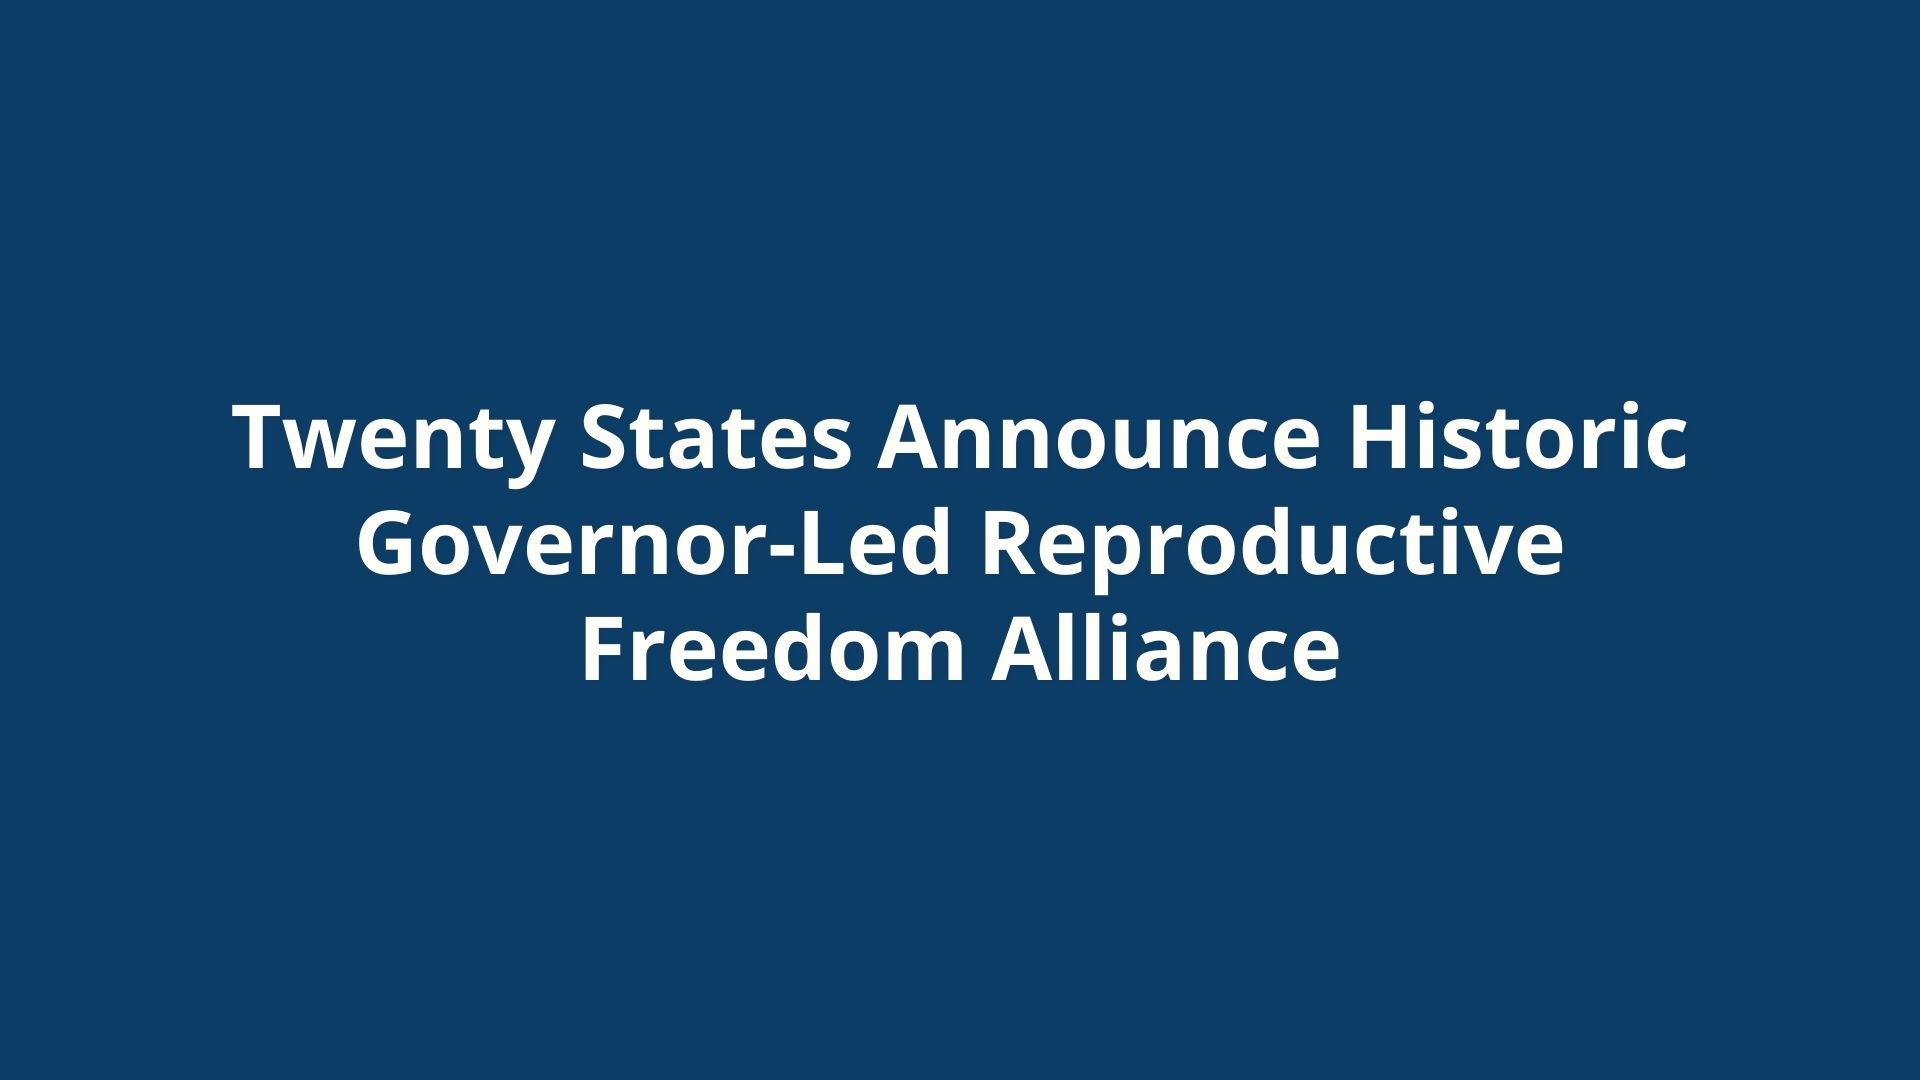 Twenty states announce historic Governor-led Reproductive Freedom Alliance